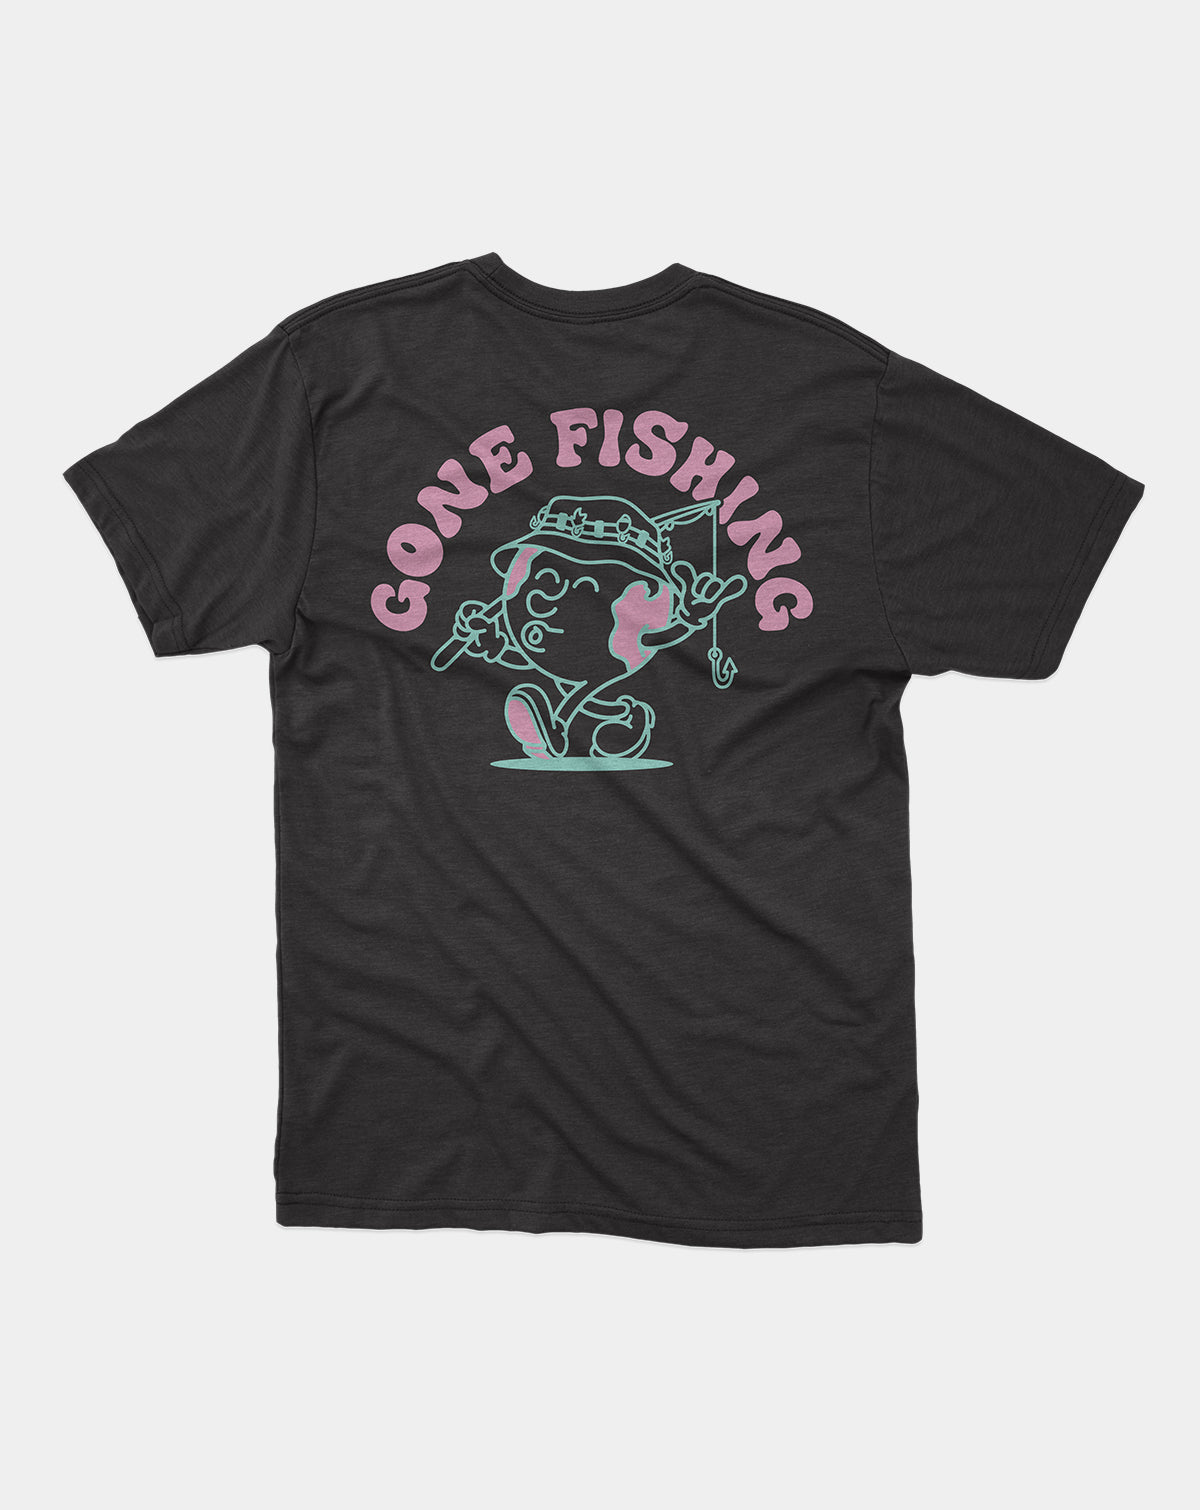 Women's Fishing Tee, Oversized Tee, Outdoor Adventure Clothing, Gone Fishing Shirt.